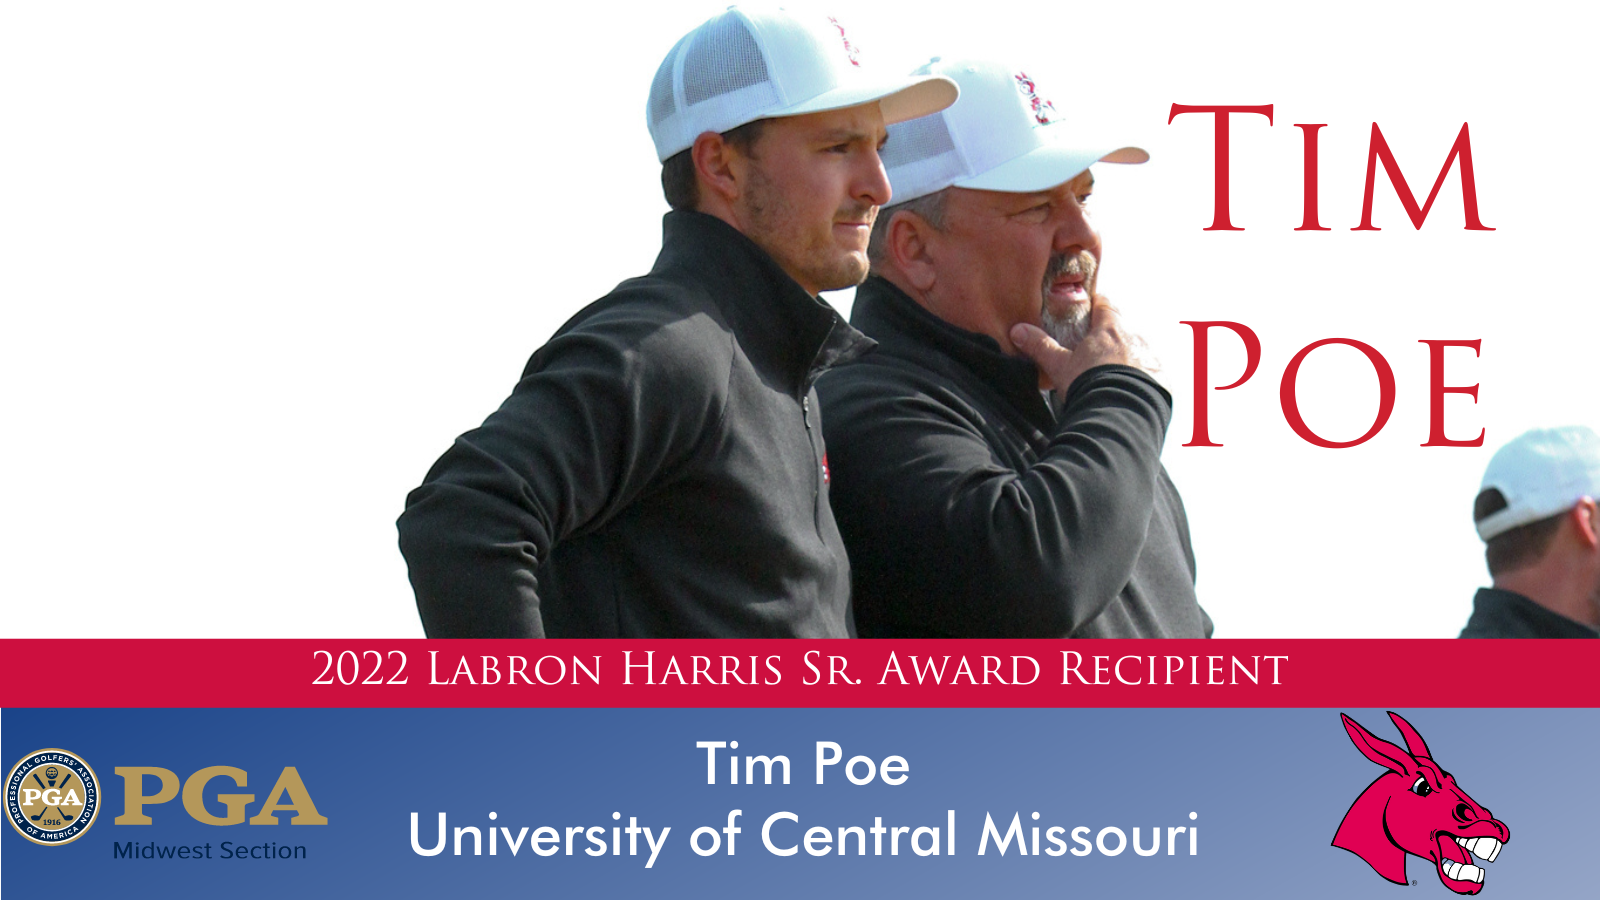 Tim Poe Named Recipient of 2022 Labron Harris Sr. Award